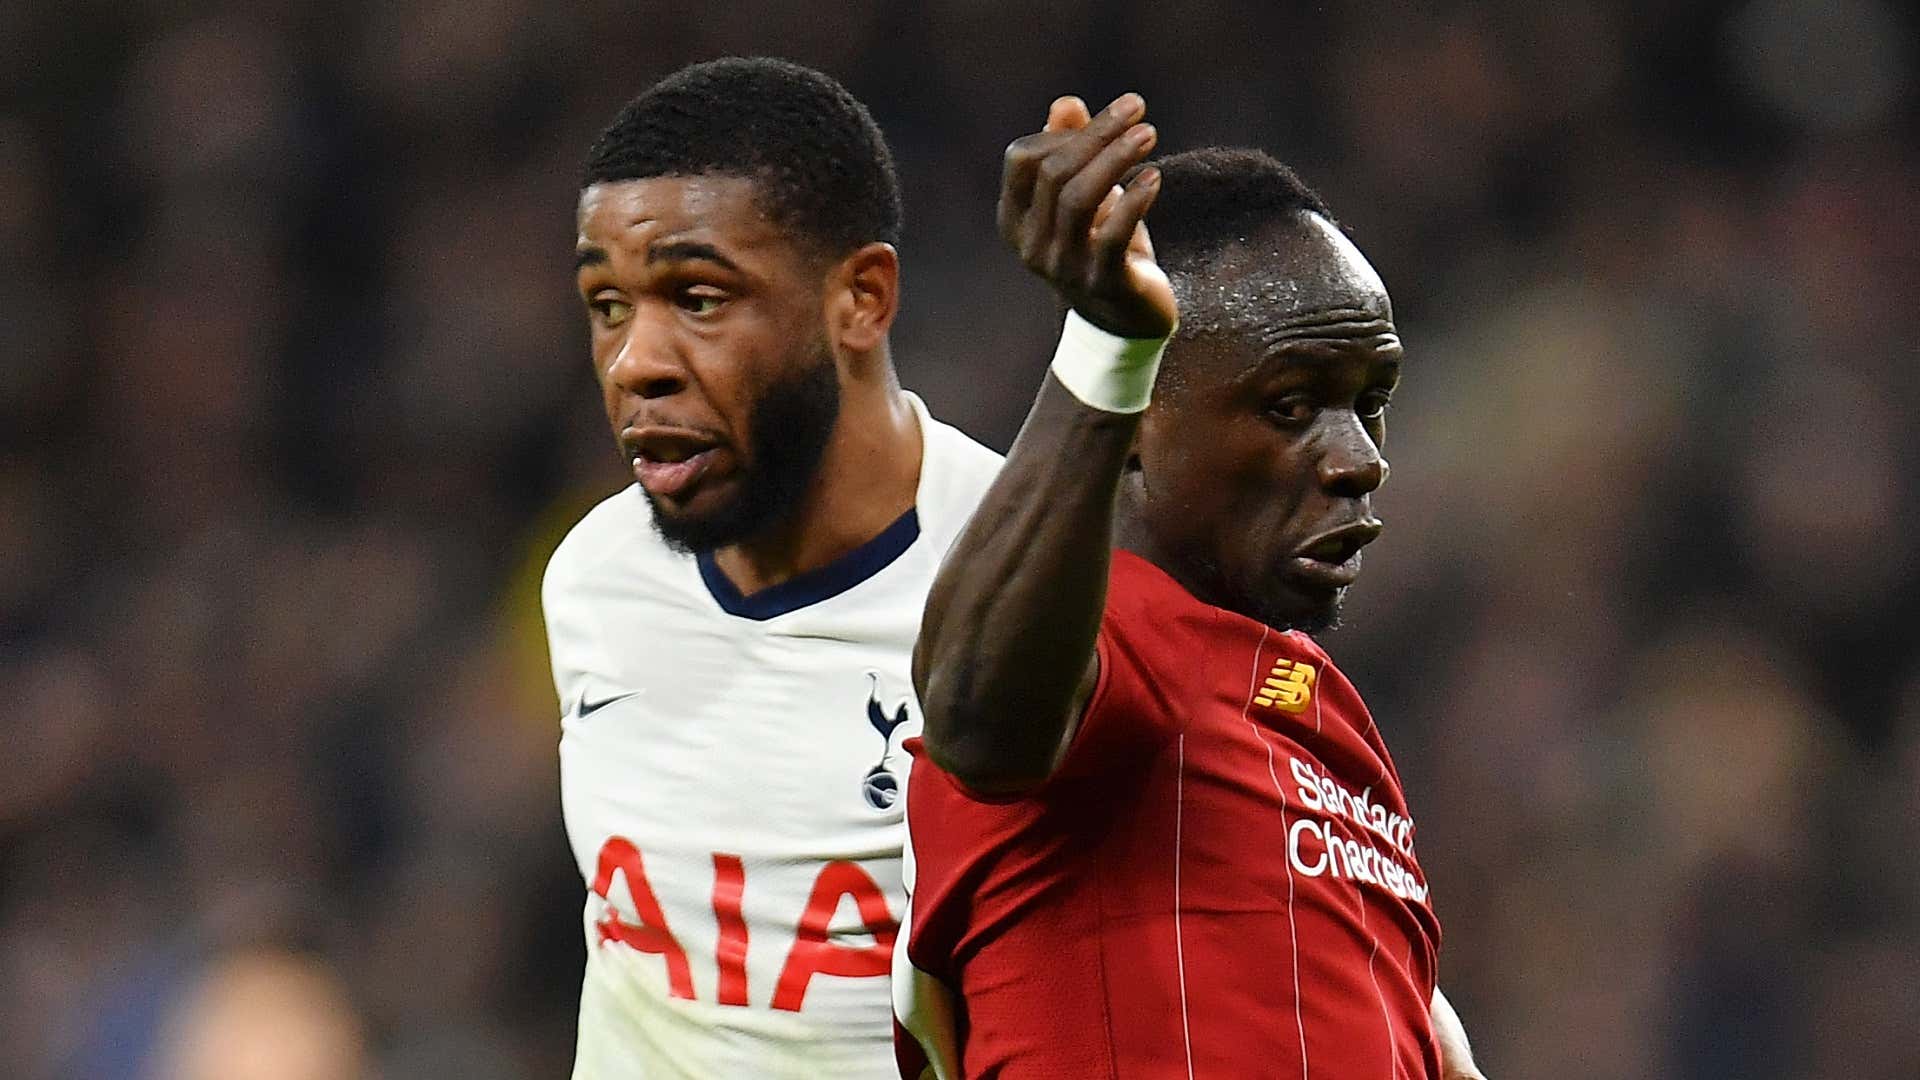 Japhet Tanganga Sadio Mane Tottenham Liverpool 2019-20